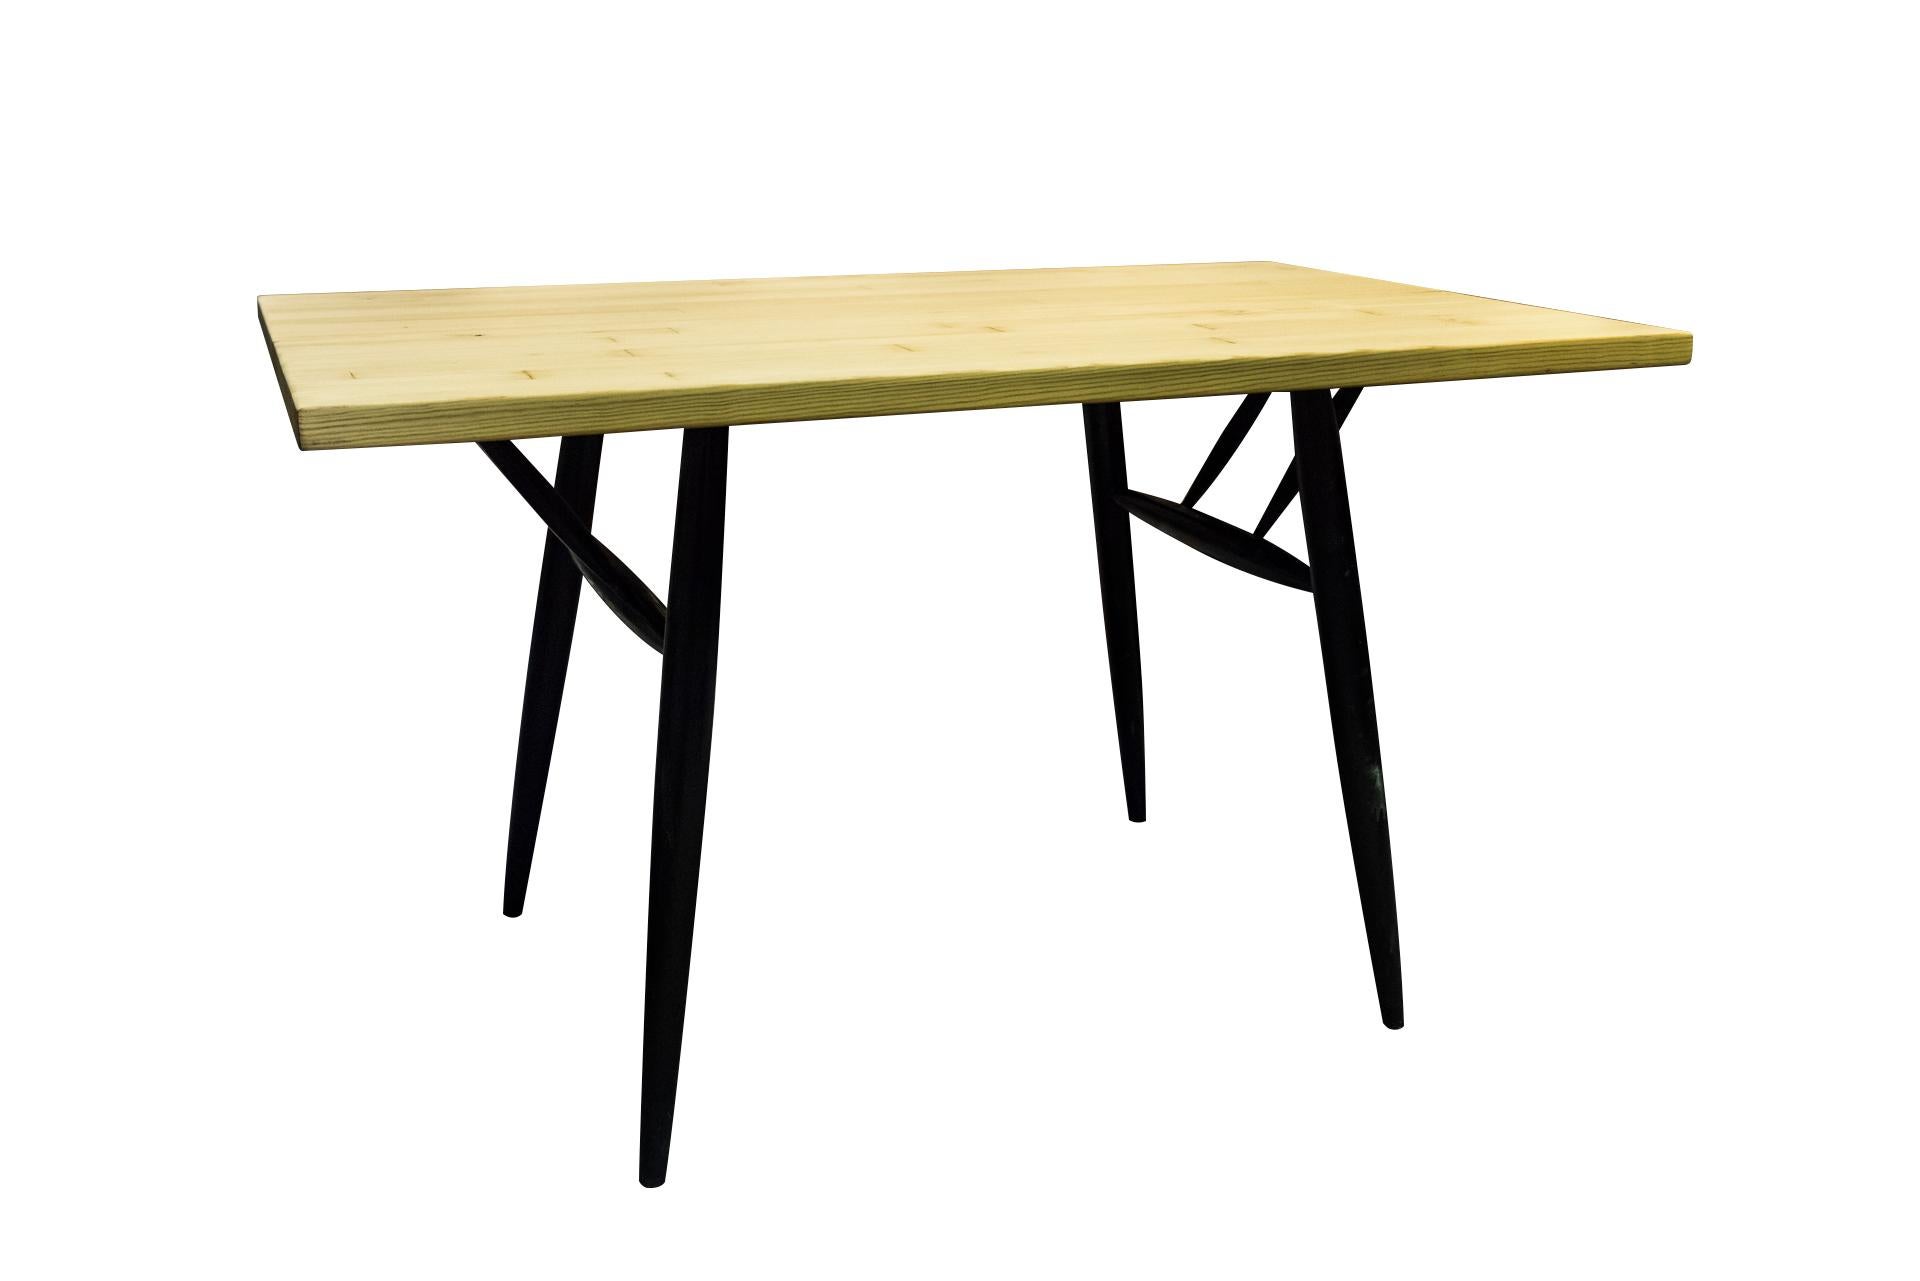 Ilmari Tapiovaara (1914-1999), 
Pirkka dining room table,
Natural wood tabletop, lacquered wood feet,
Finland, circa 1960

Measures: Width 120 cm, height 70 cm, depth 73 cm.